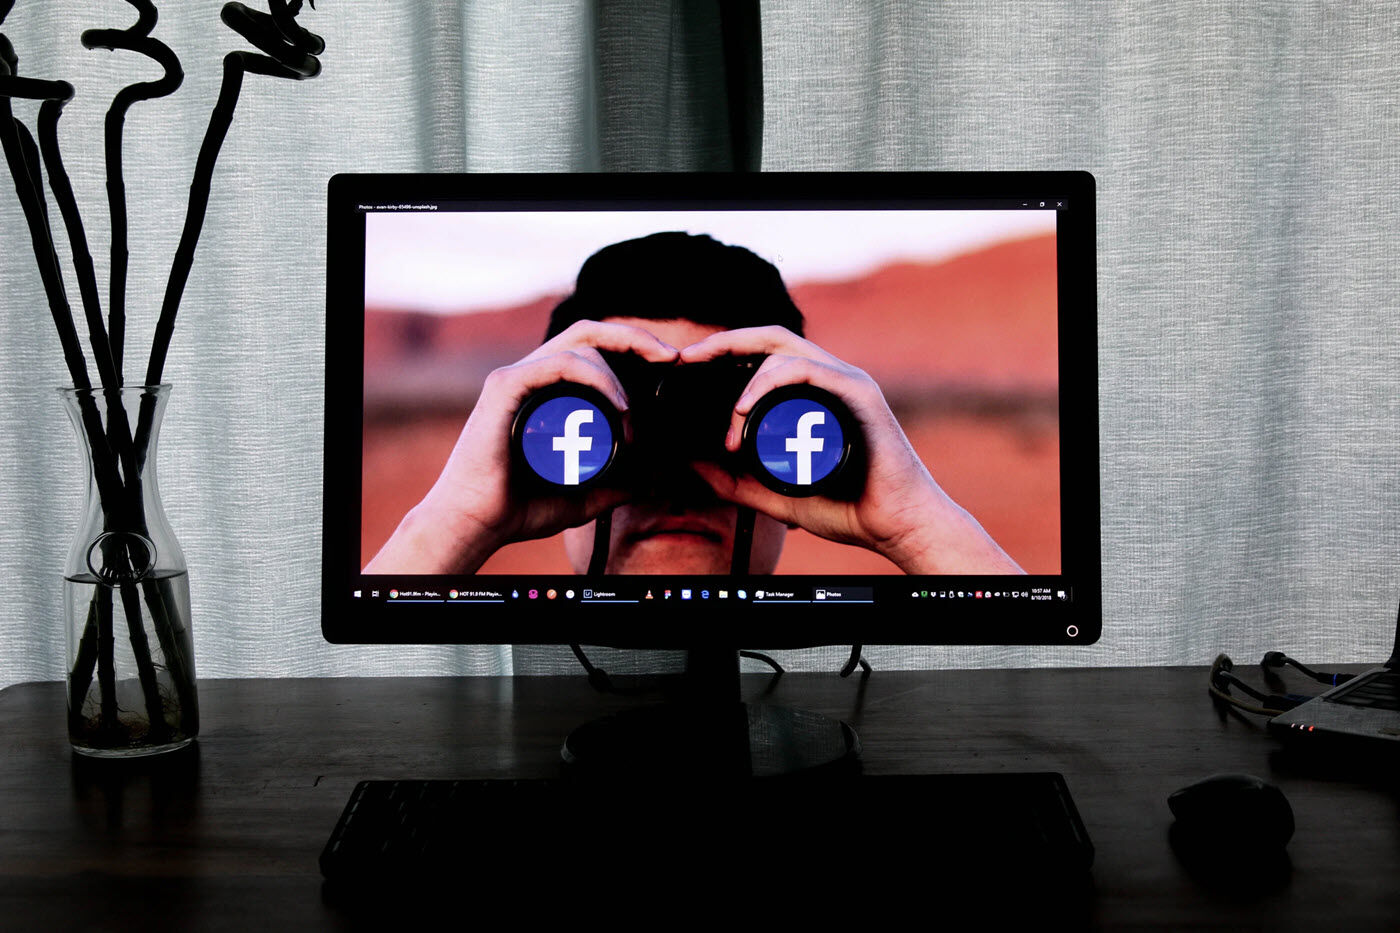 Scaricare i video da Facebook senza usare software